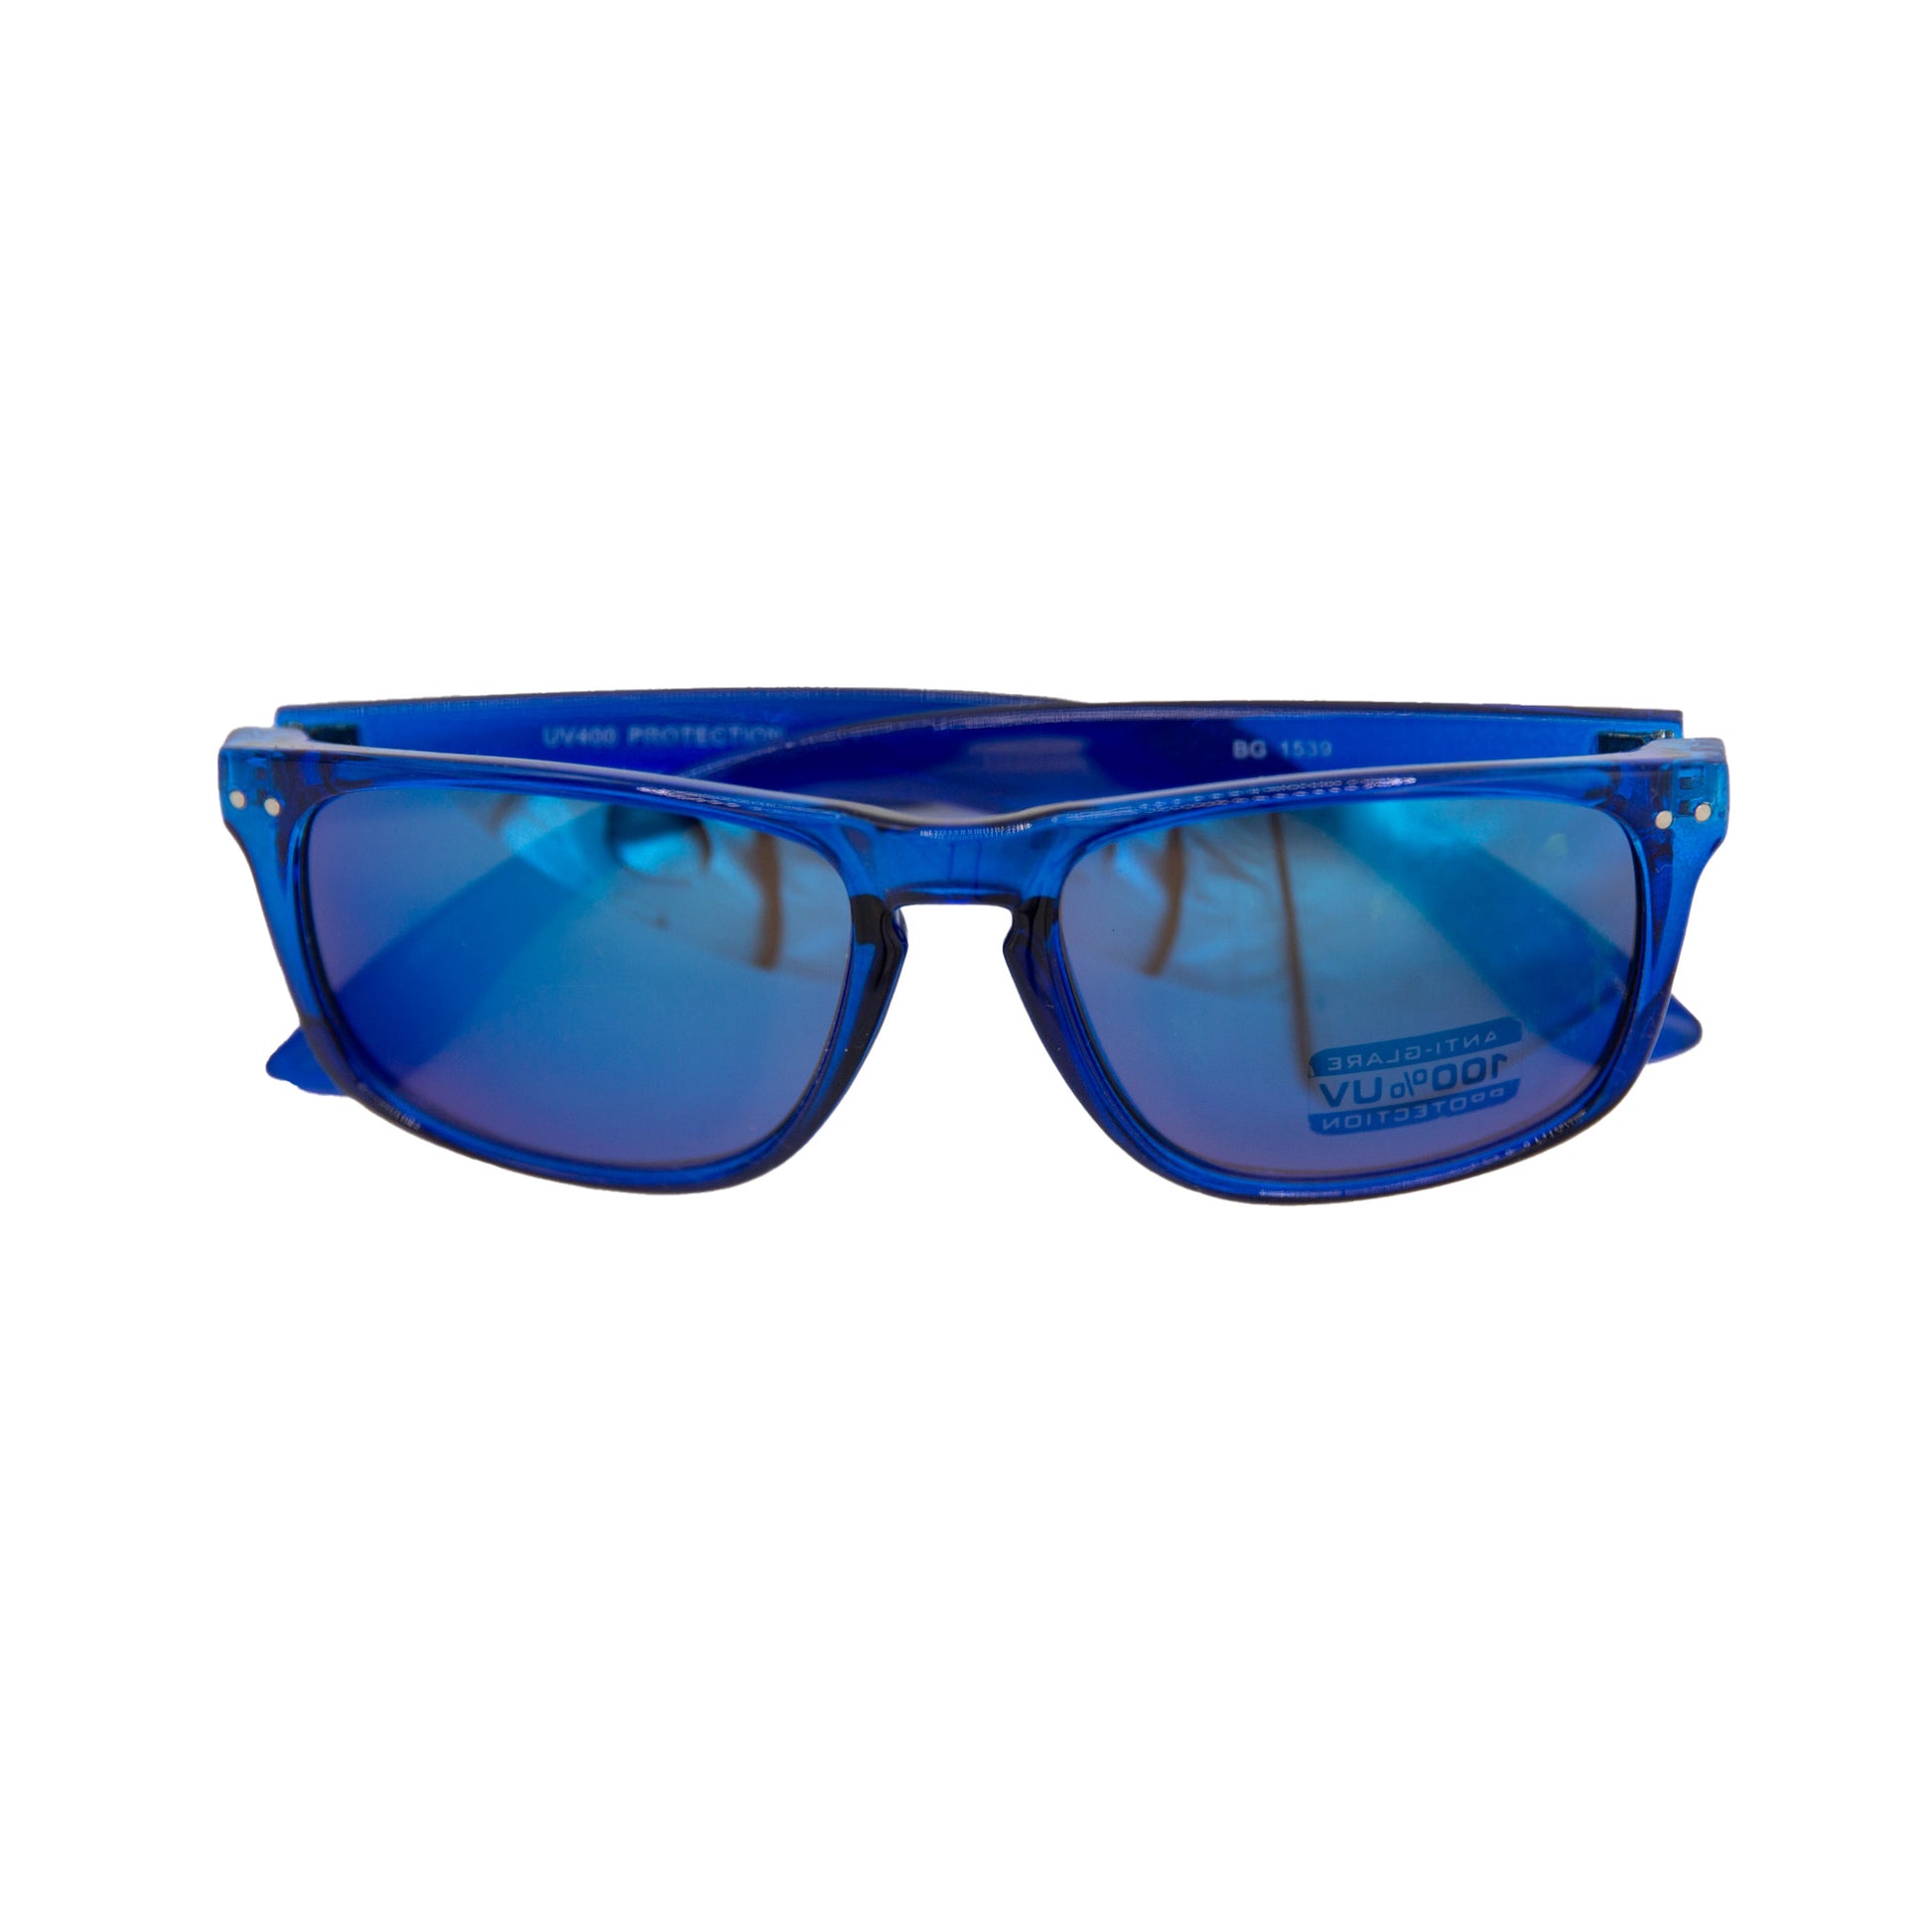 Blue Gem Adult Sunglasses Wayfarer - Clear Blue with Blue Lenses